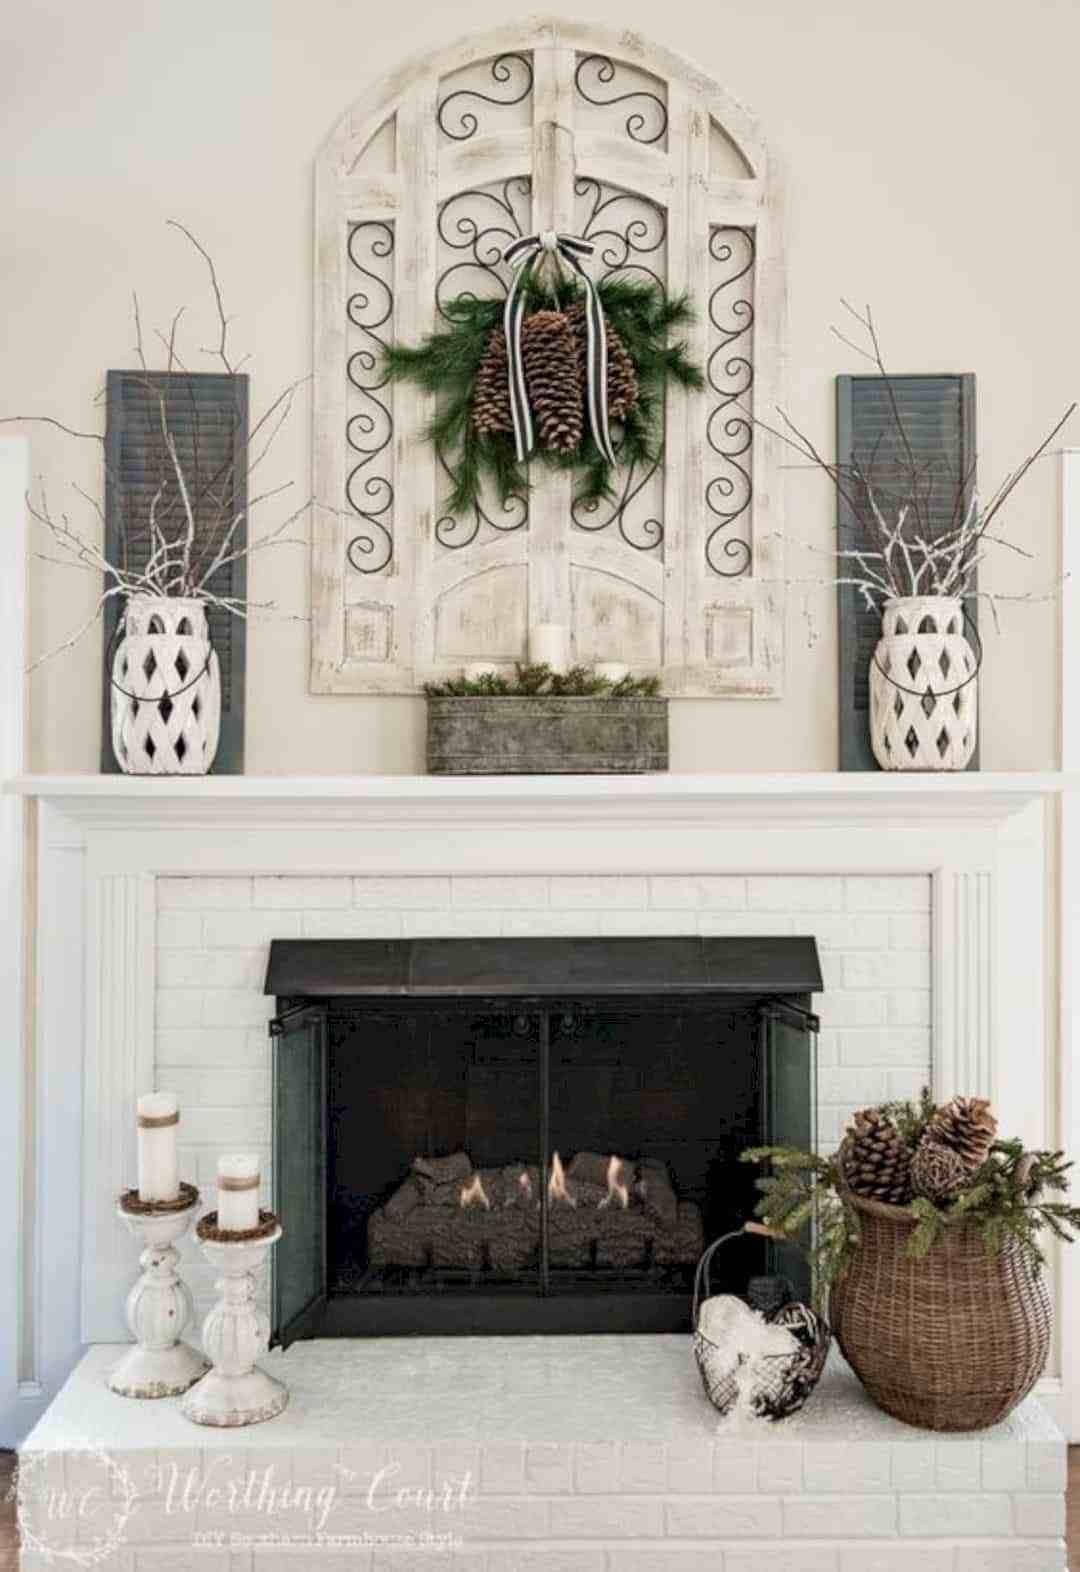 Best ideas about Fireplace Mantel Decor
. Save or Pin 16 Fireplace Mantel Decorating Ideas Futurist Architecture Now.